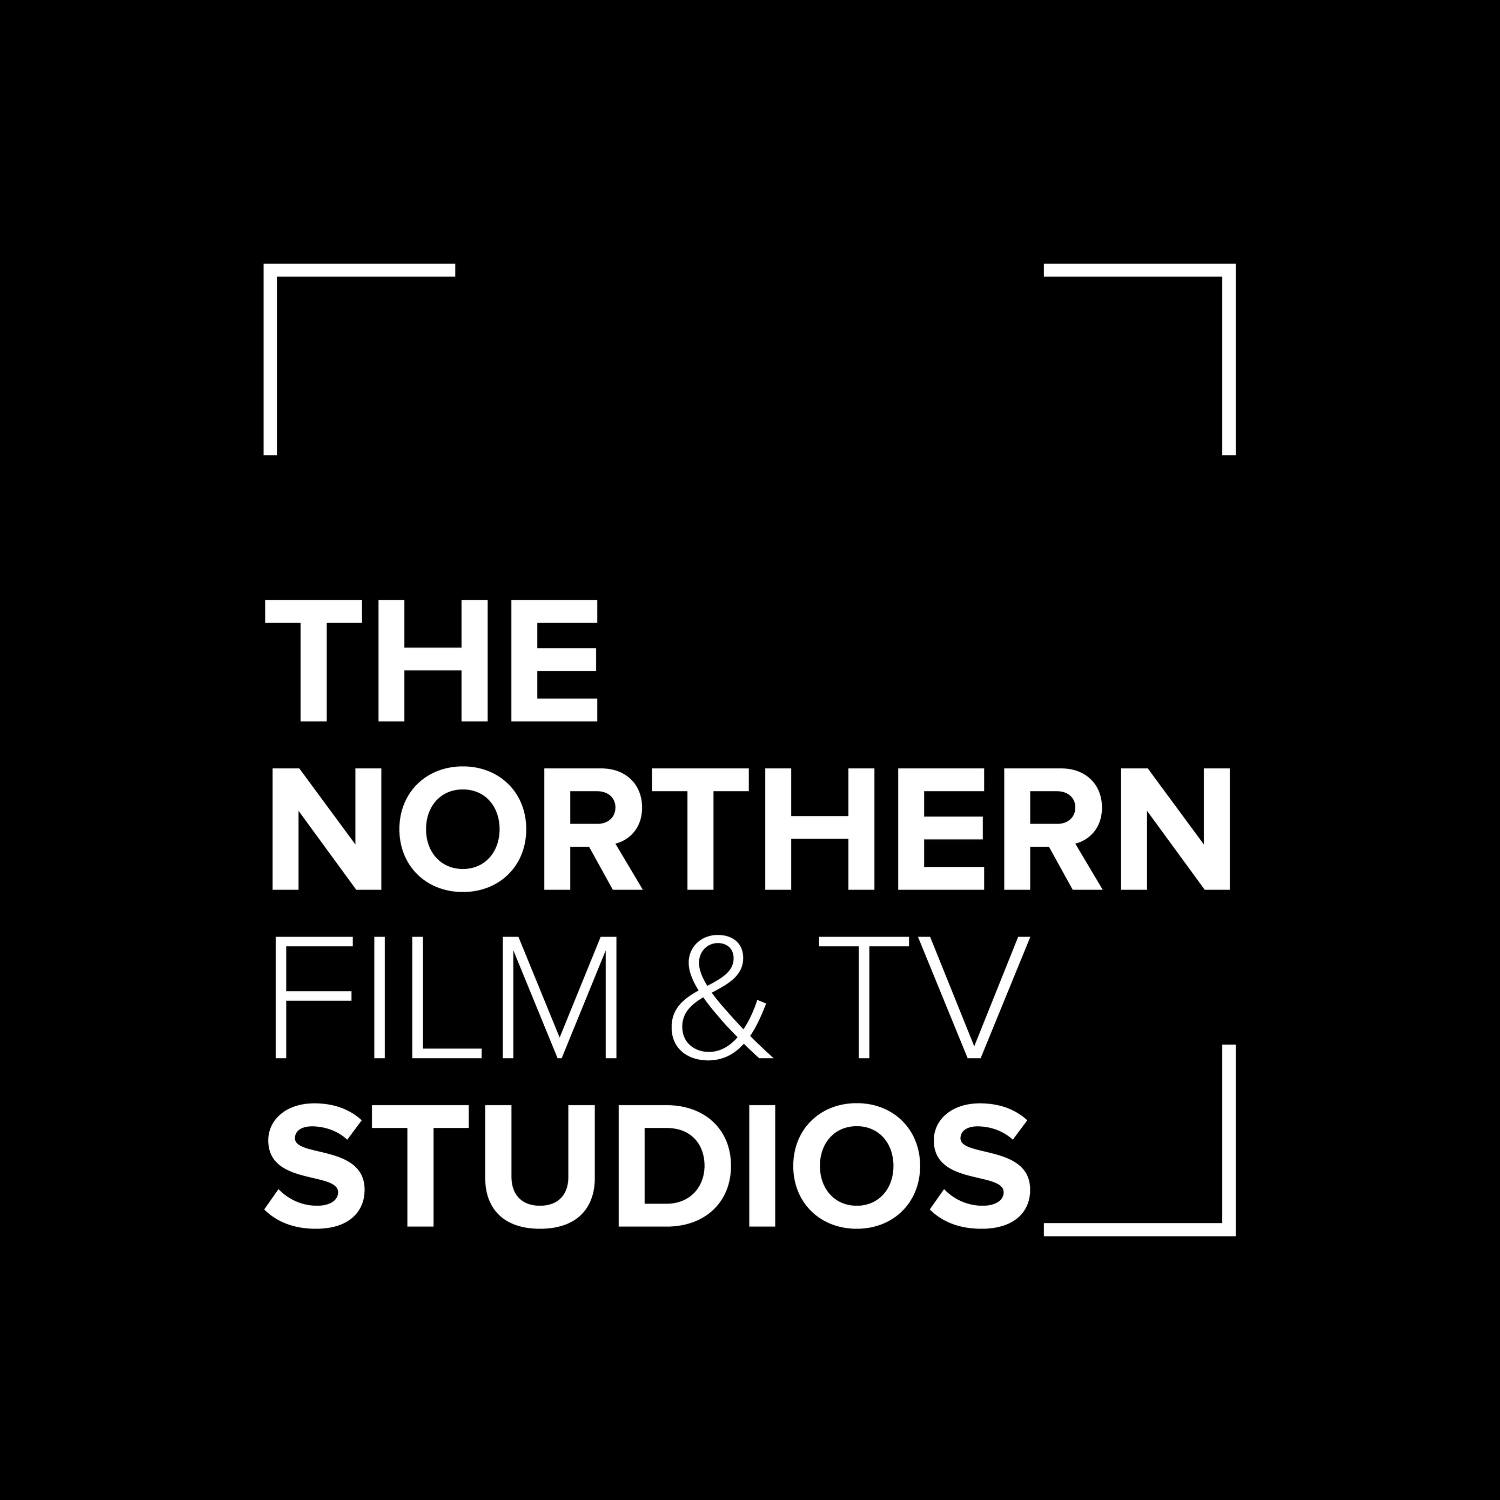 The Northern Film & TV Studios